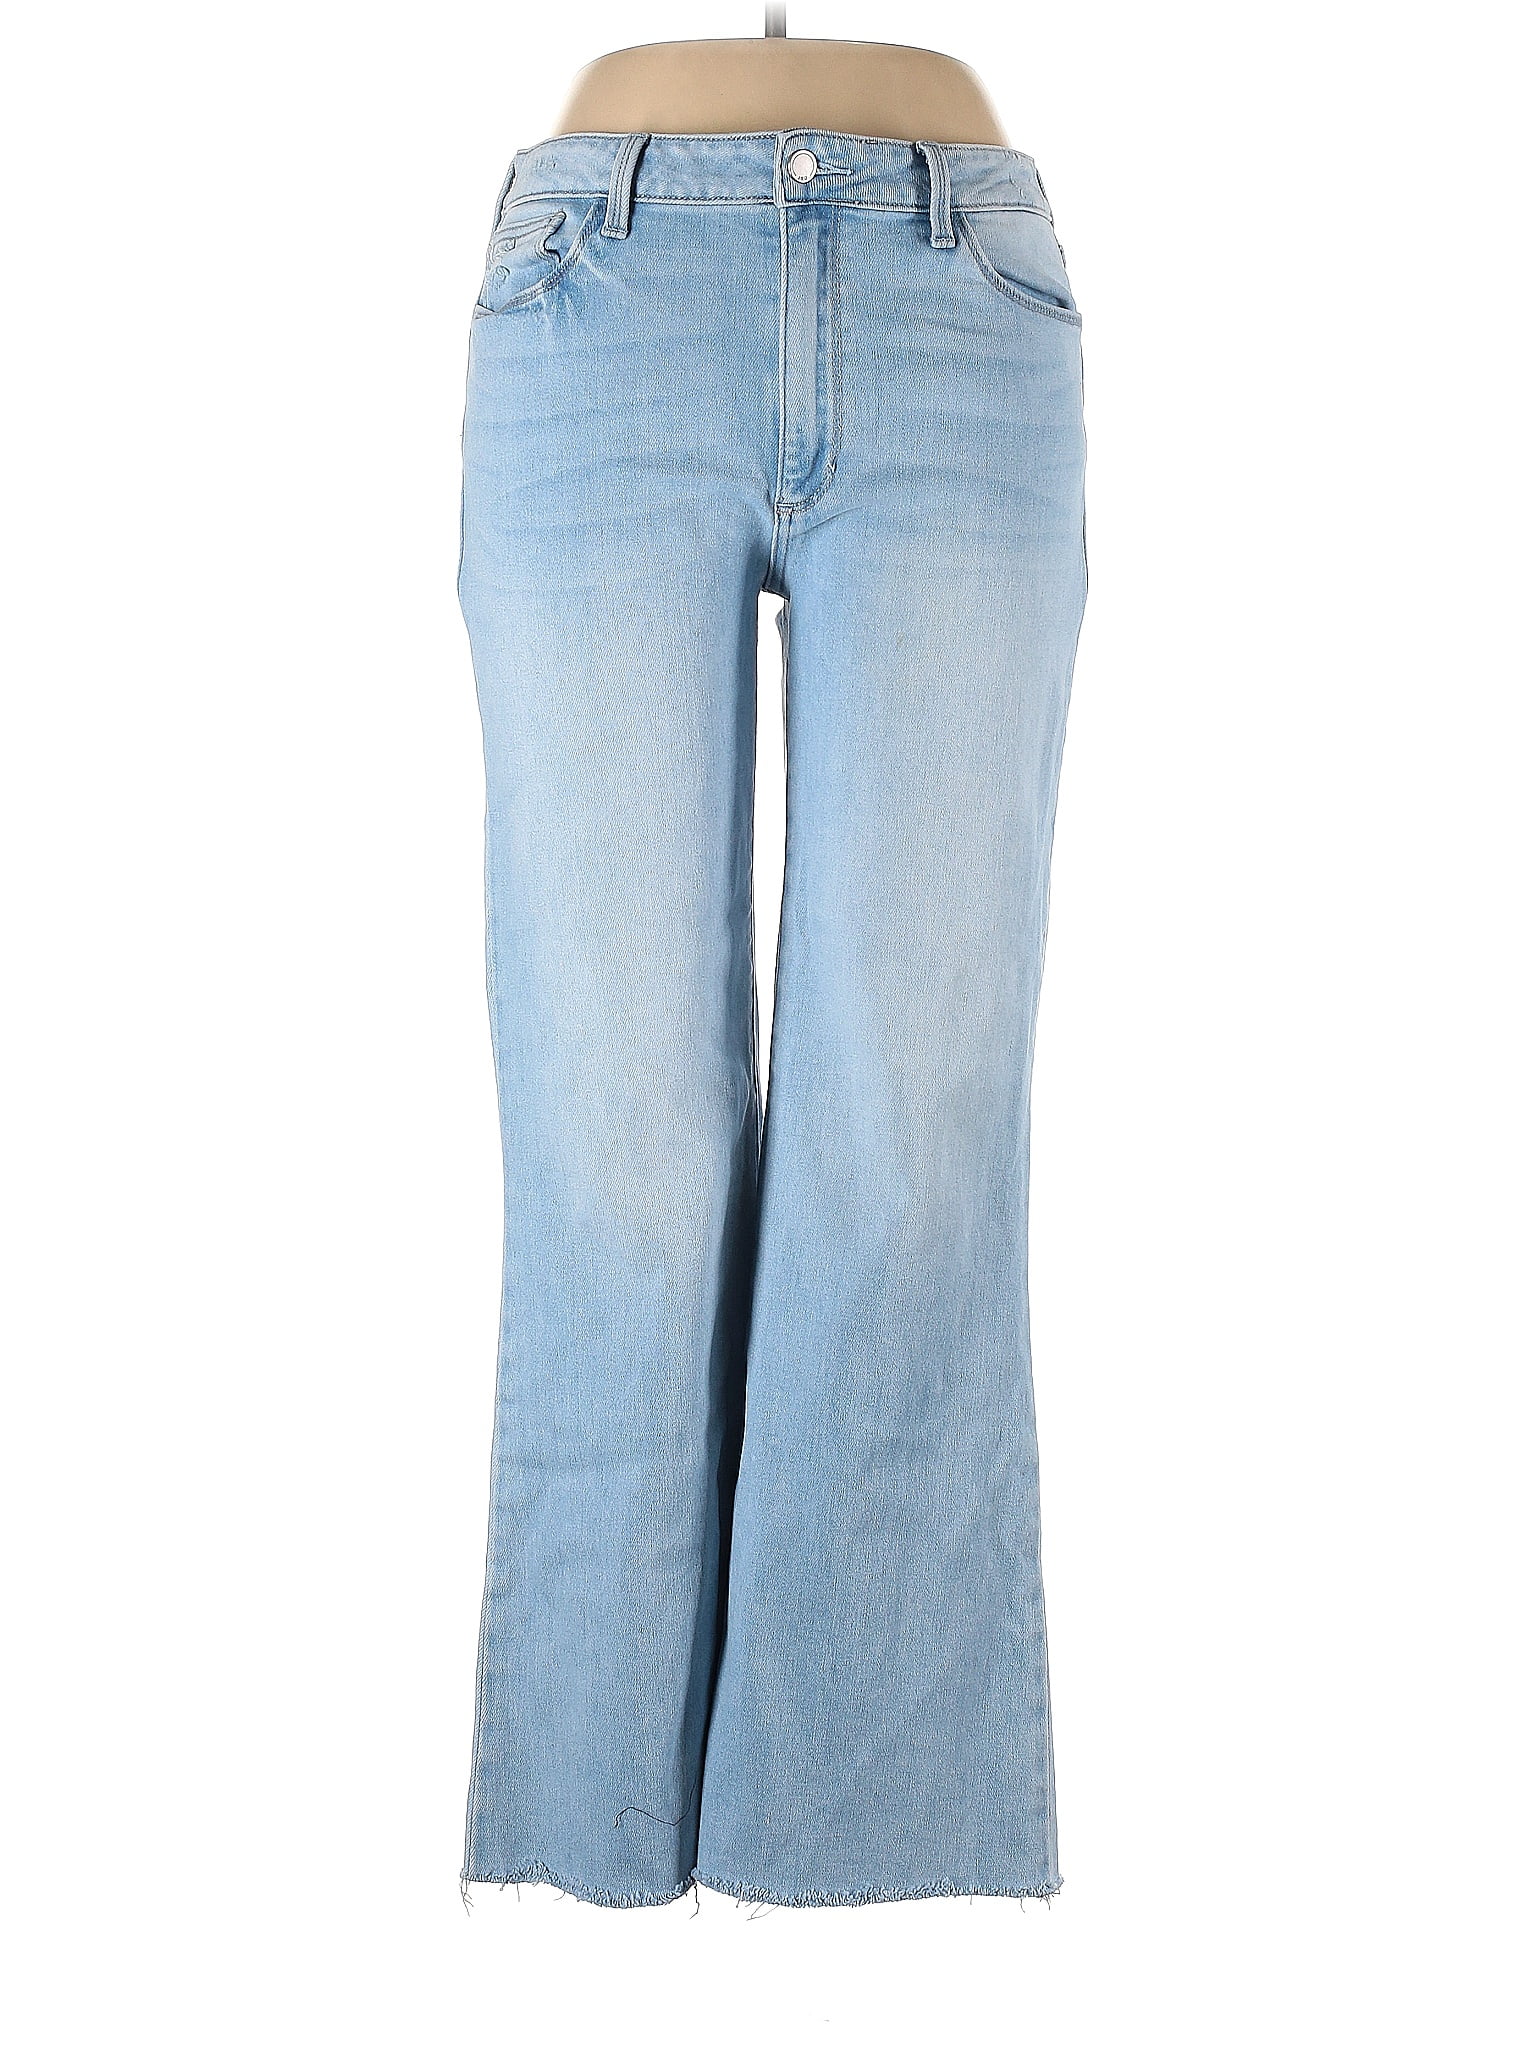 JBD Solid Blue Jeans 31 Waist - 56% off | ThredUp